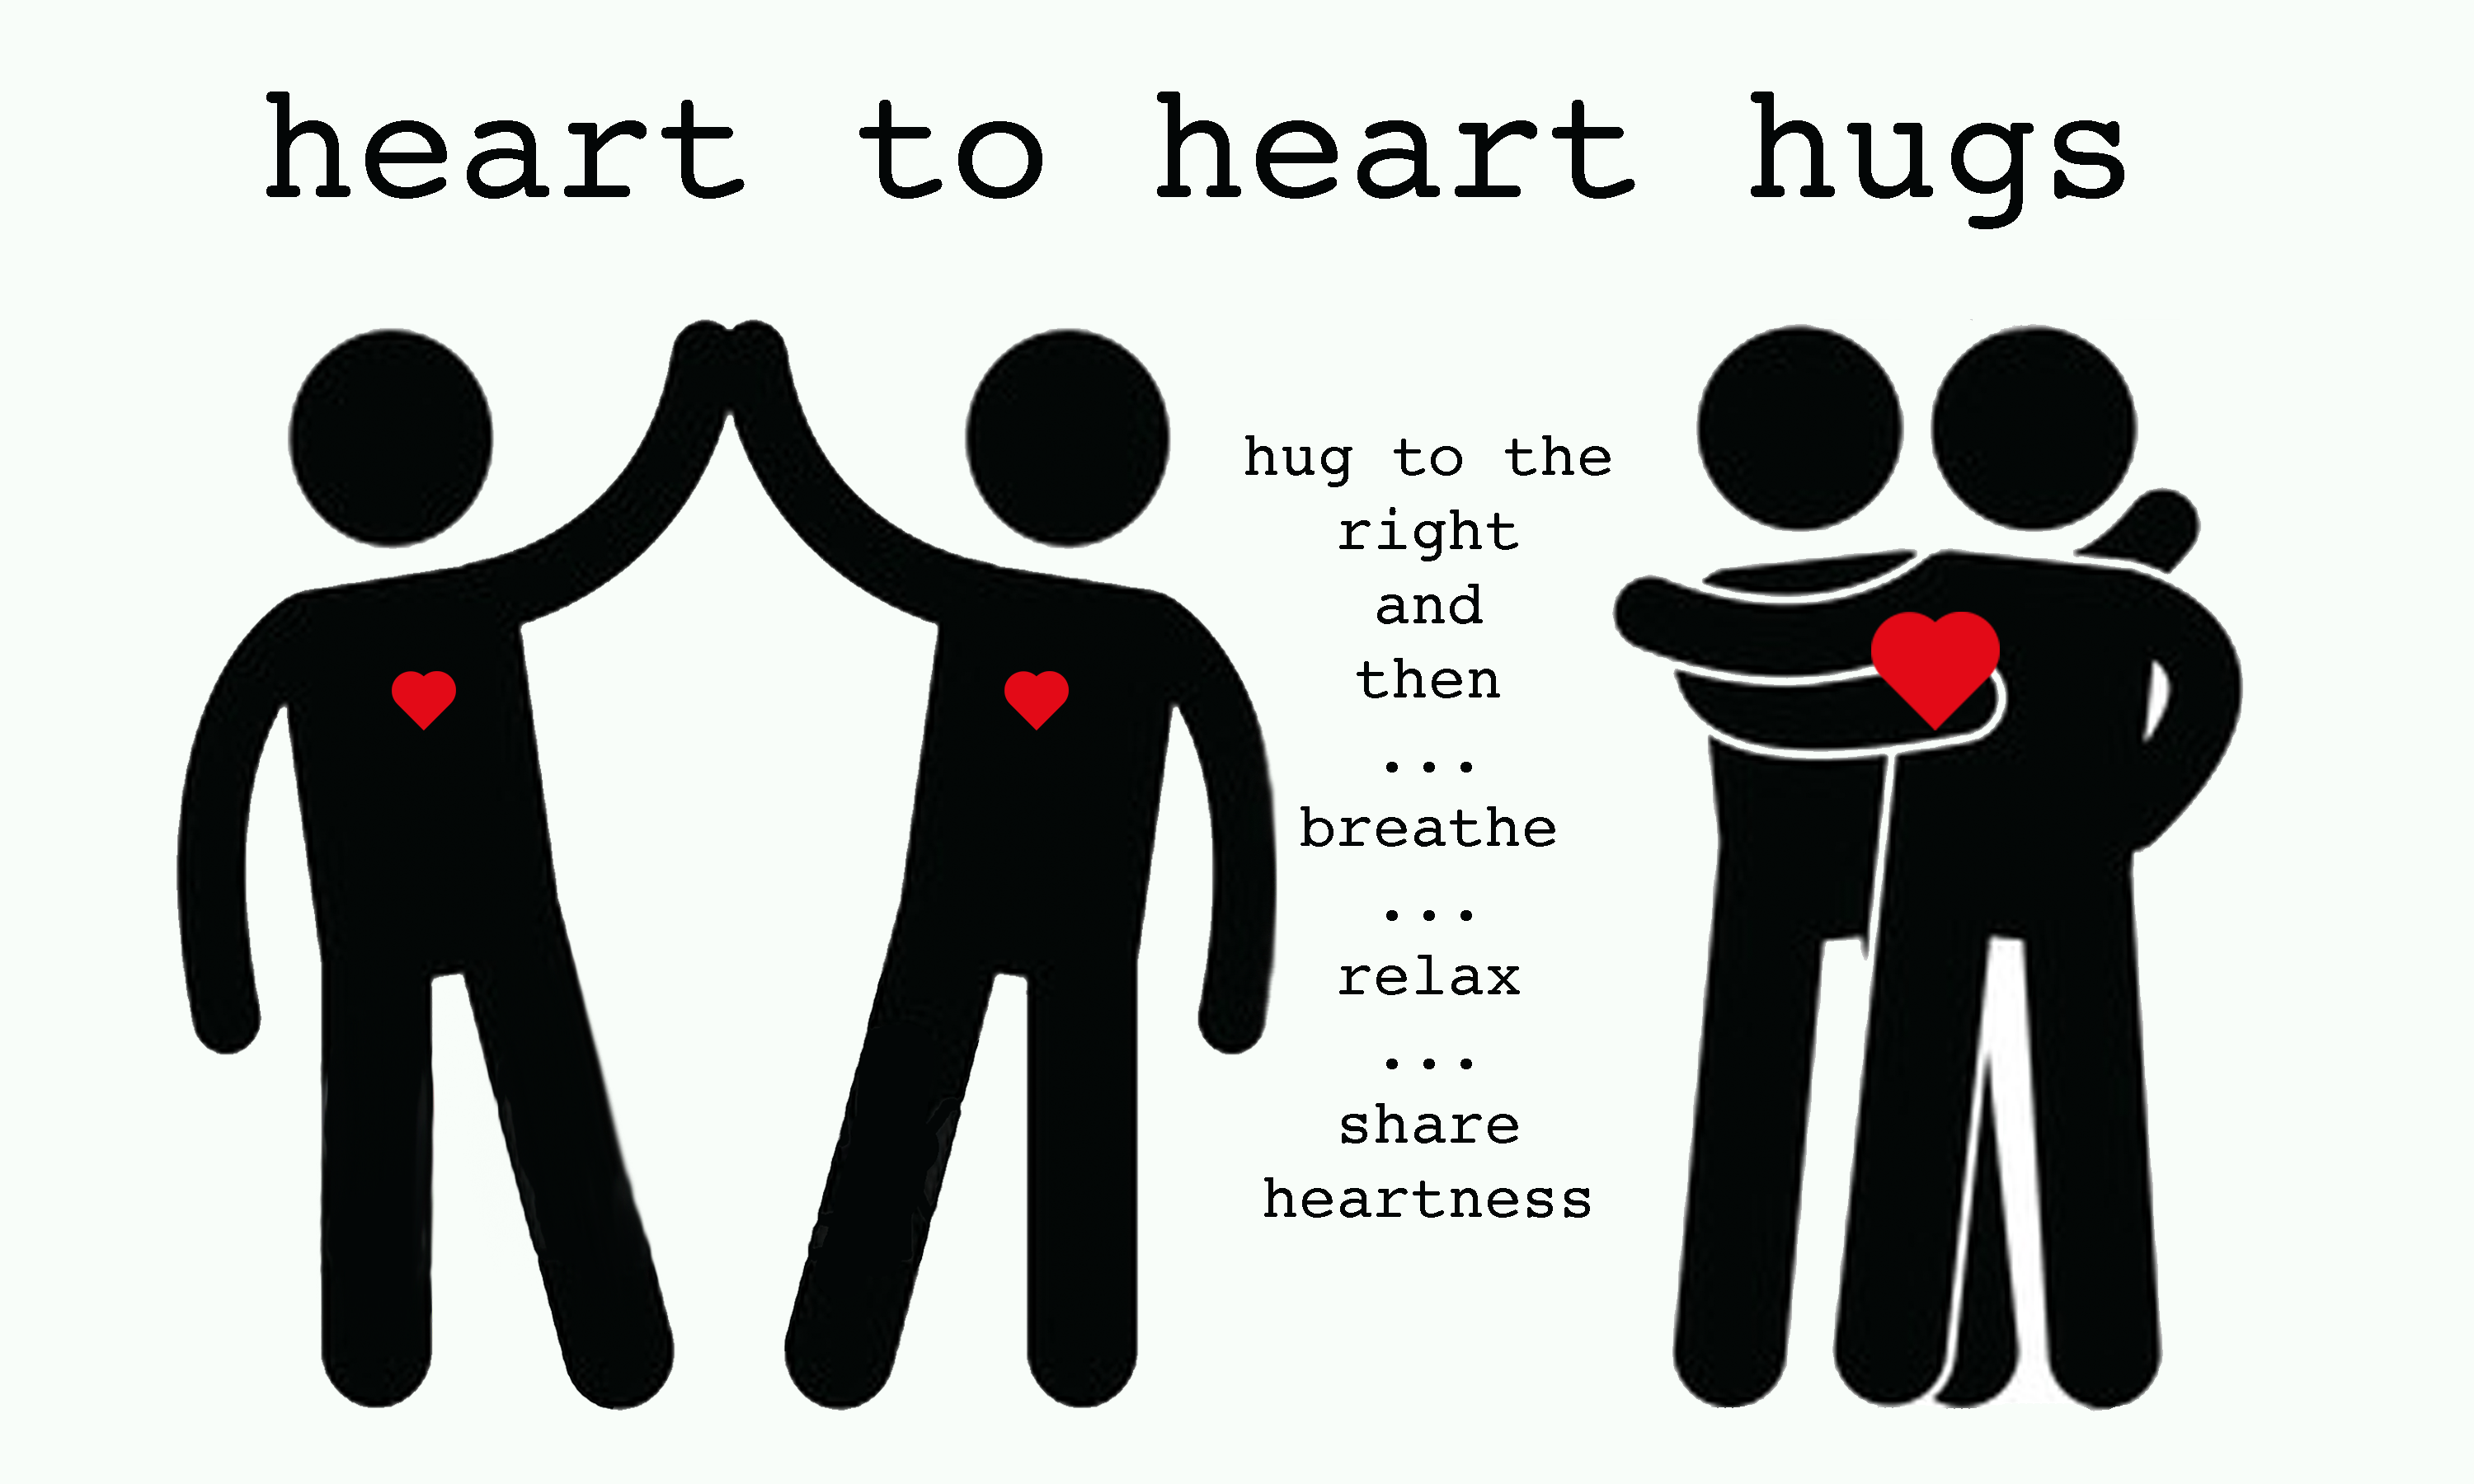 Heart to heart hugging is the correct way to hug ...